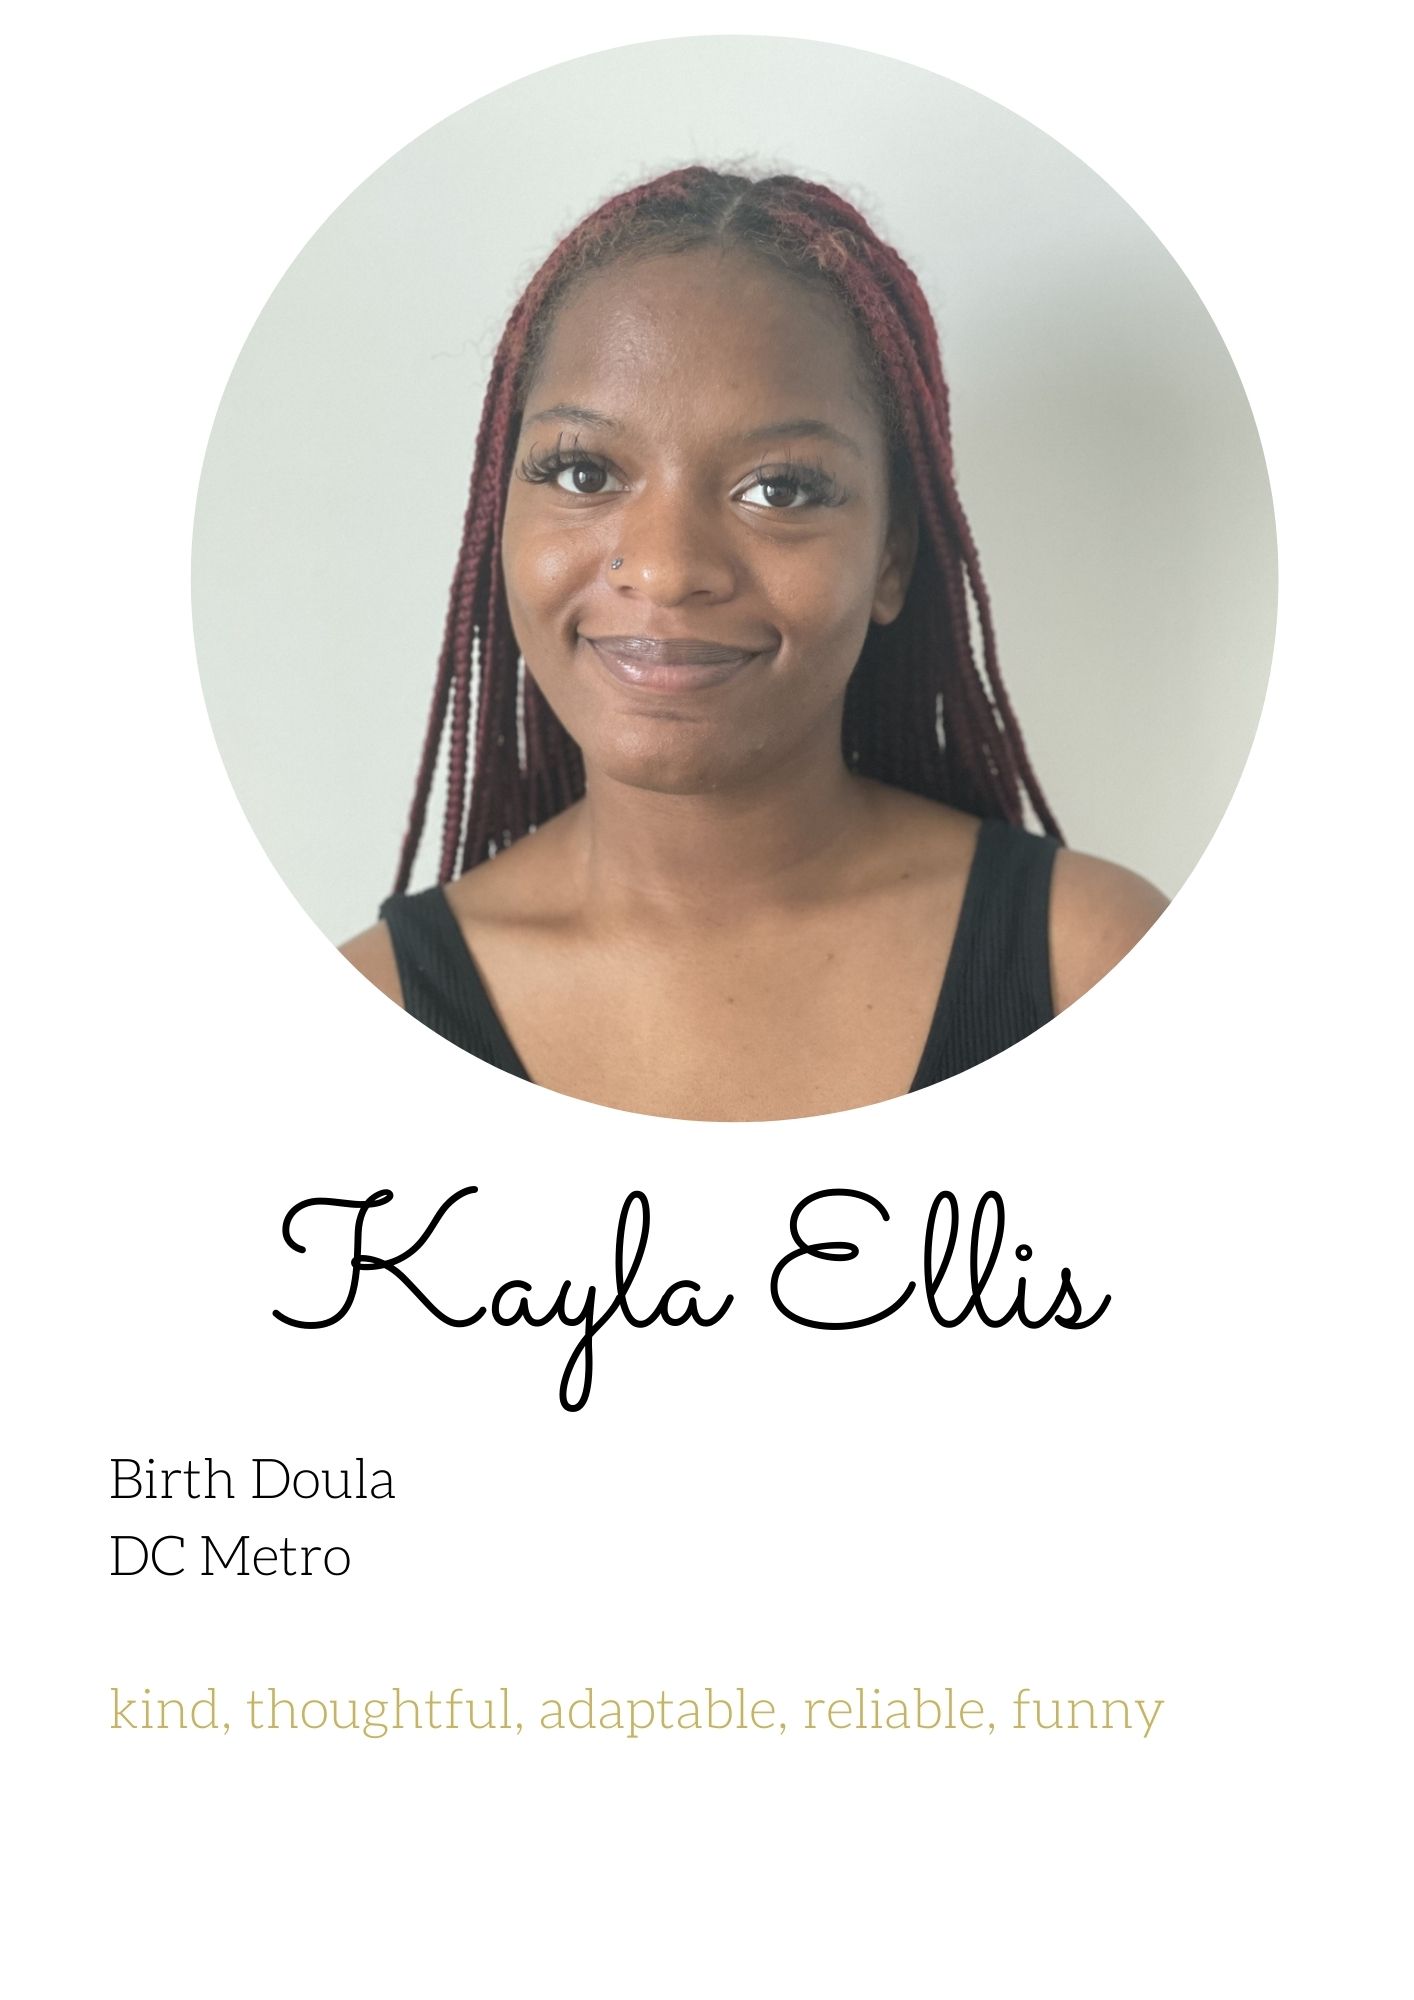 Kayla Ellis Birth Doula, DC Metro. Passionate, positive, energetic, determined, nurturing